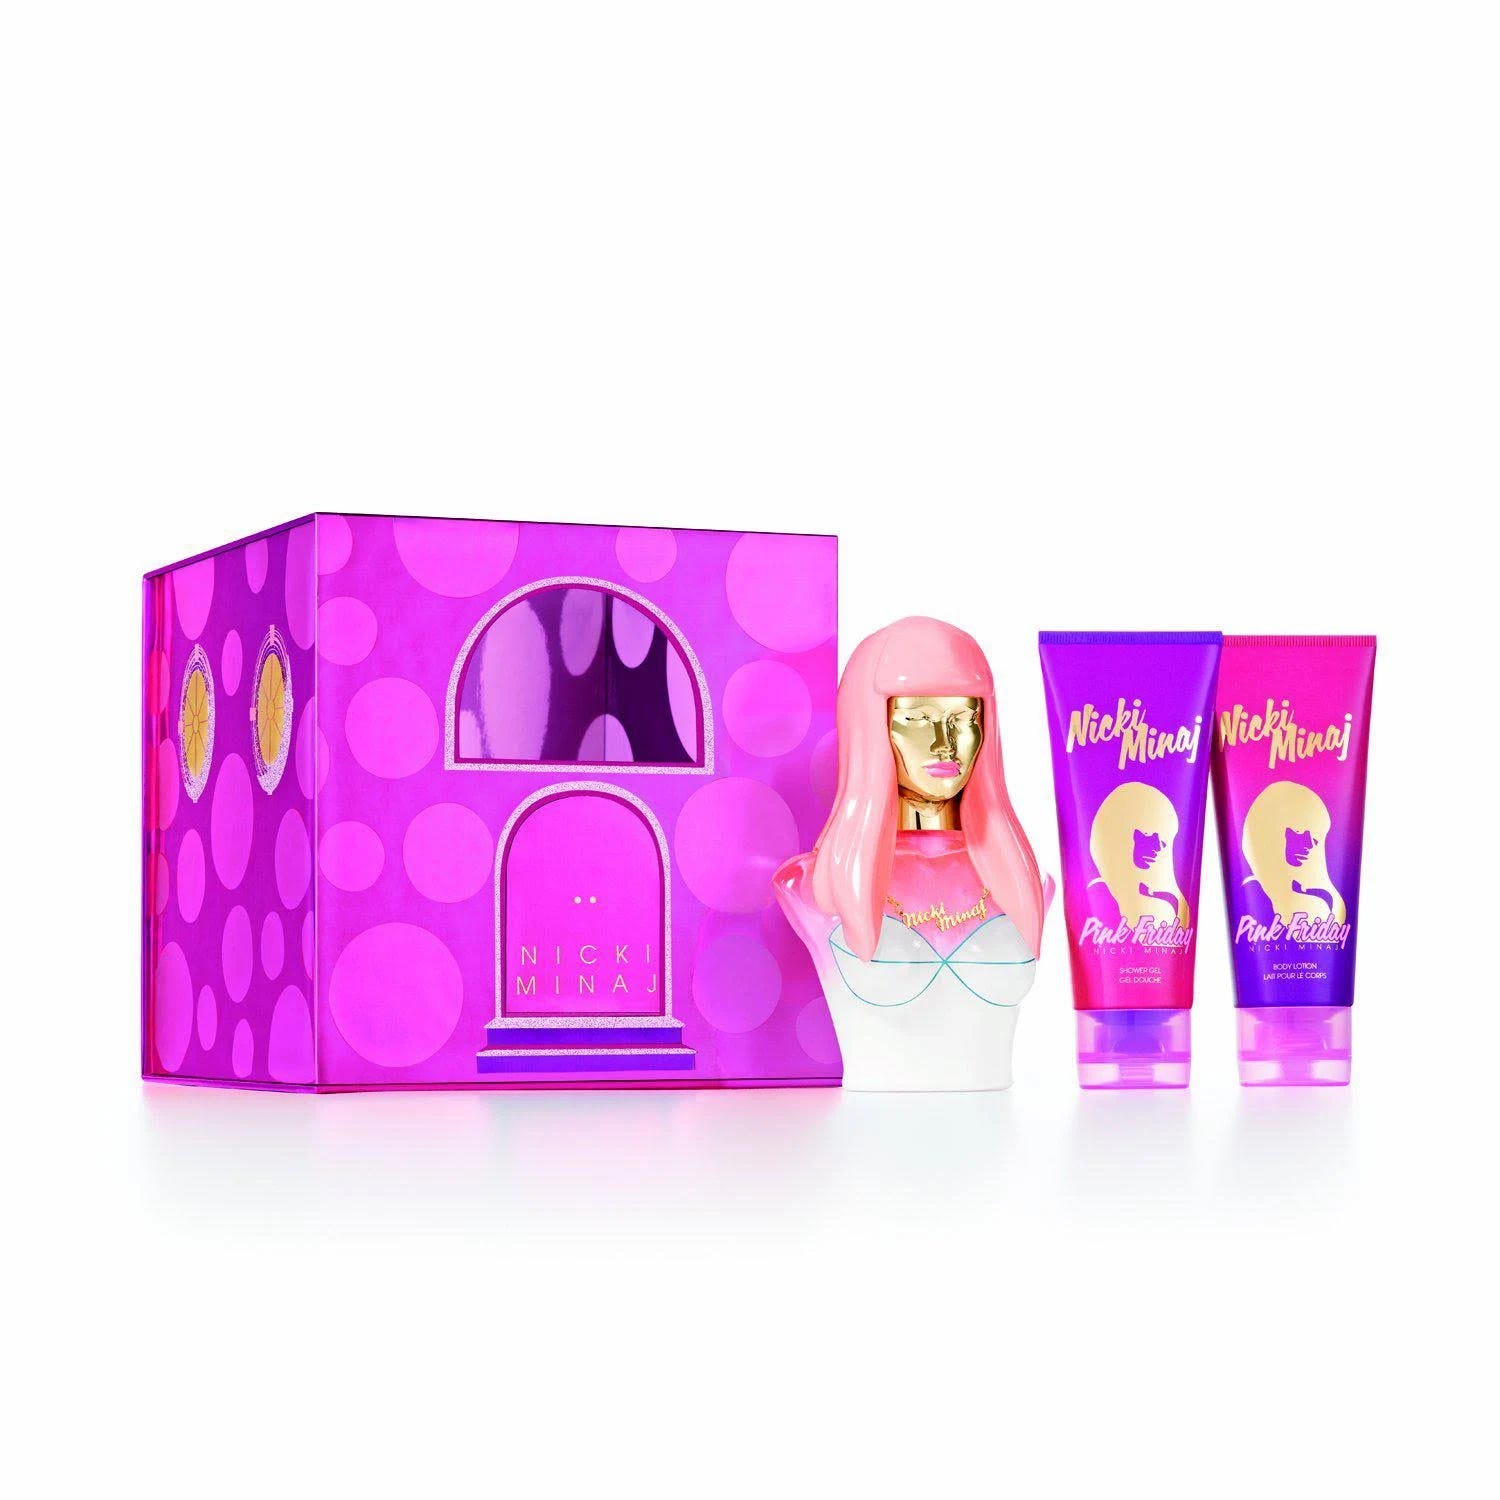 Nicki Minaj Pink Friday Perfume Gift Set with Body Lotion and Shower Gel | Image